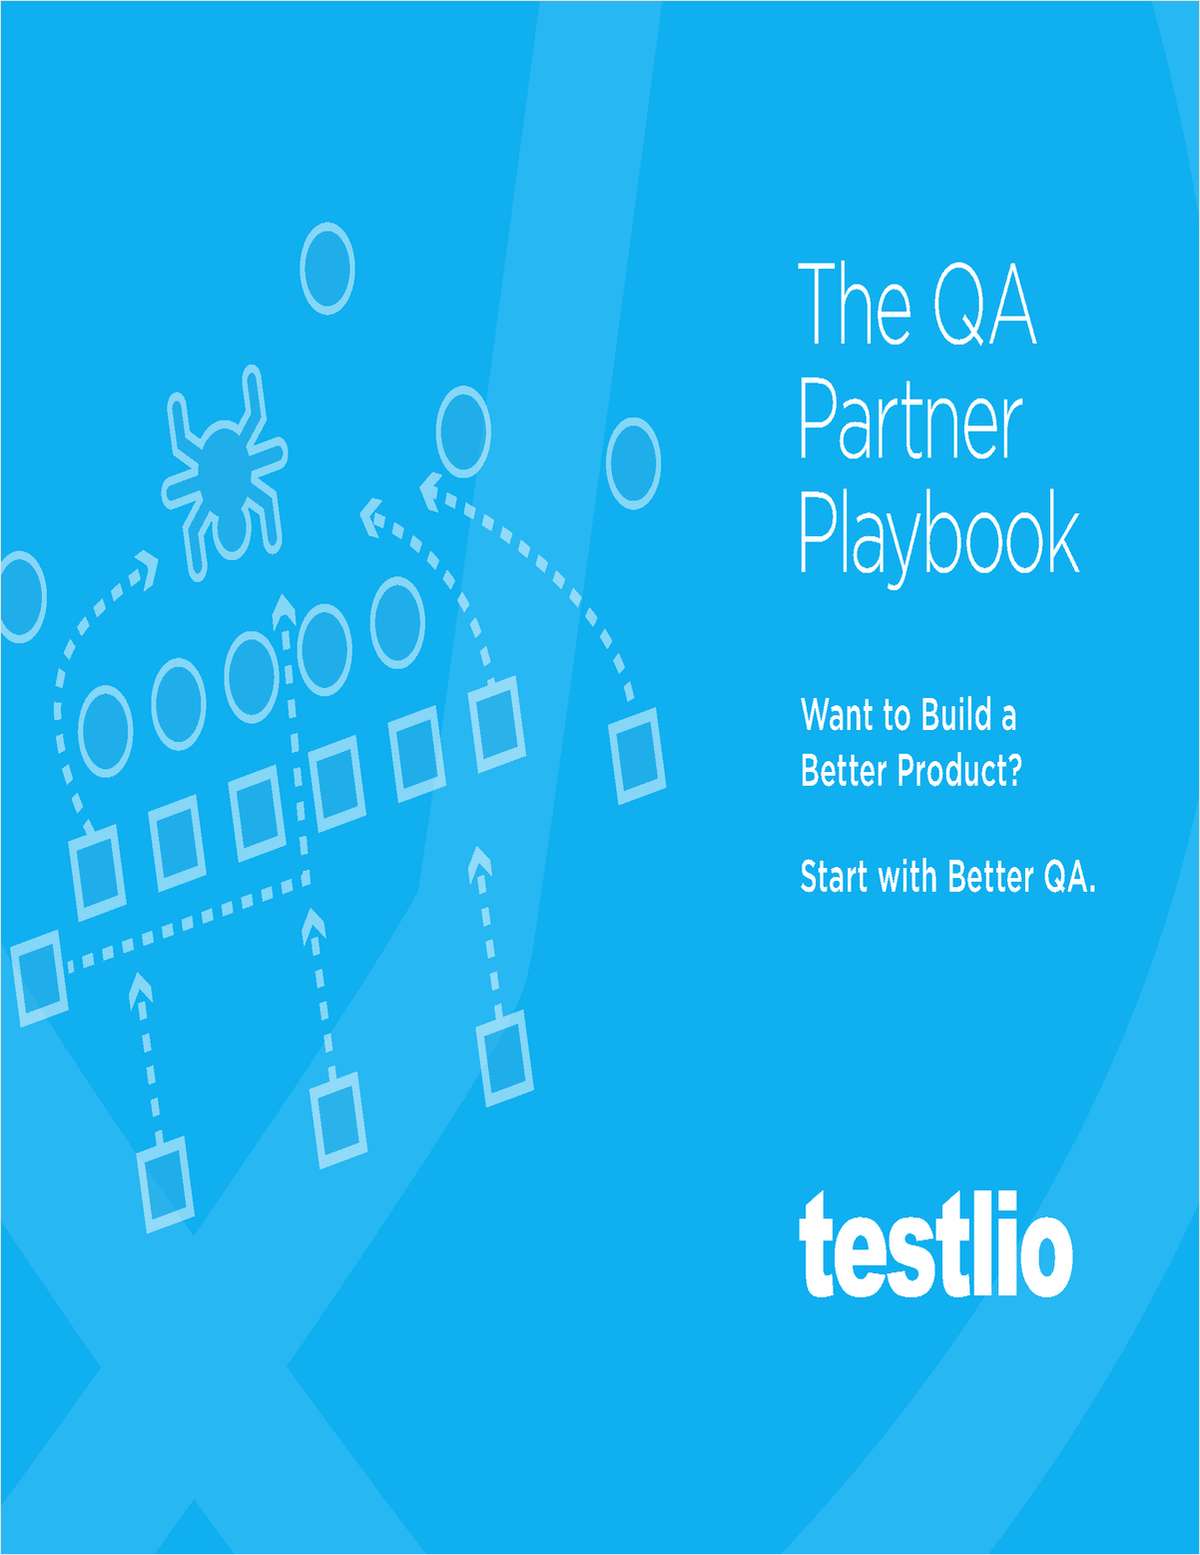 The QA Partner Playbook